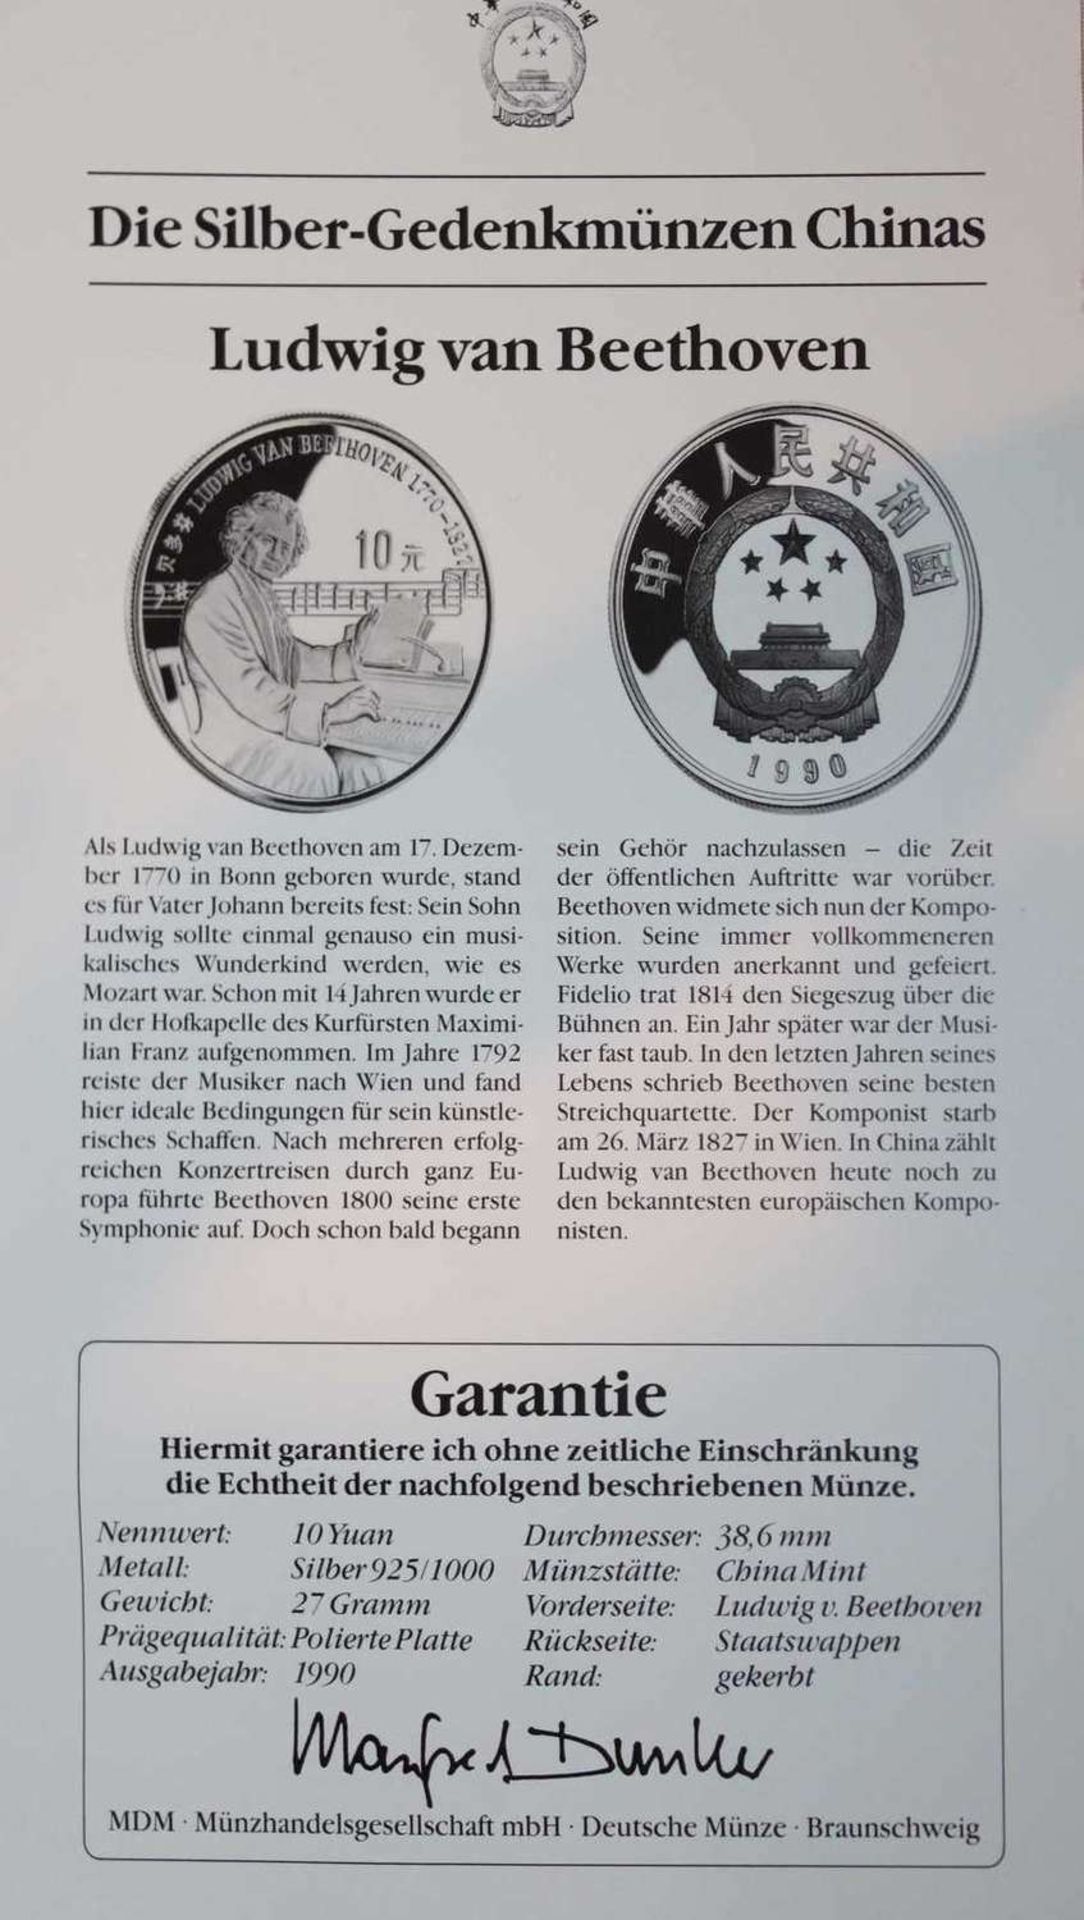 China 1990, 10 Yuan - Silbermünze "Ludwig van Beethoven". Silber 925. Gewicht: 27 gr.. In Kapsel. - Bild 3 aus 3